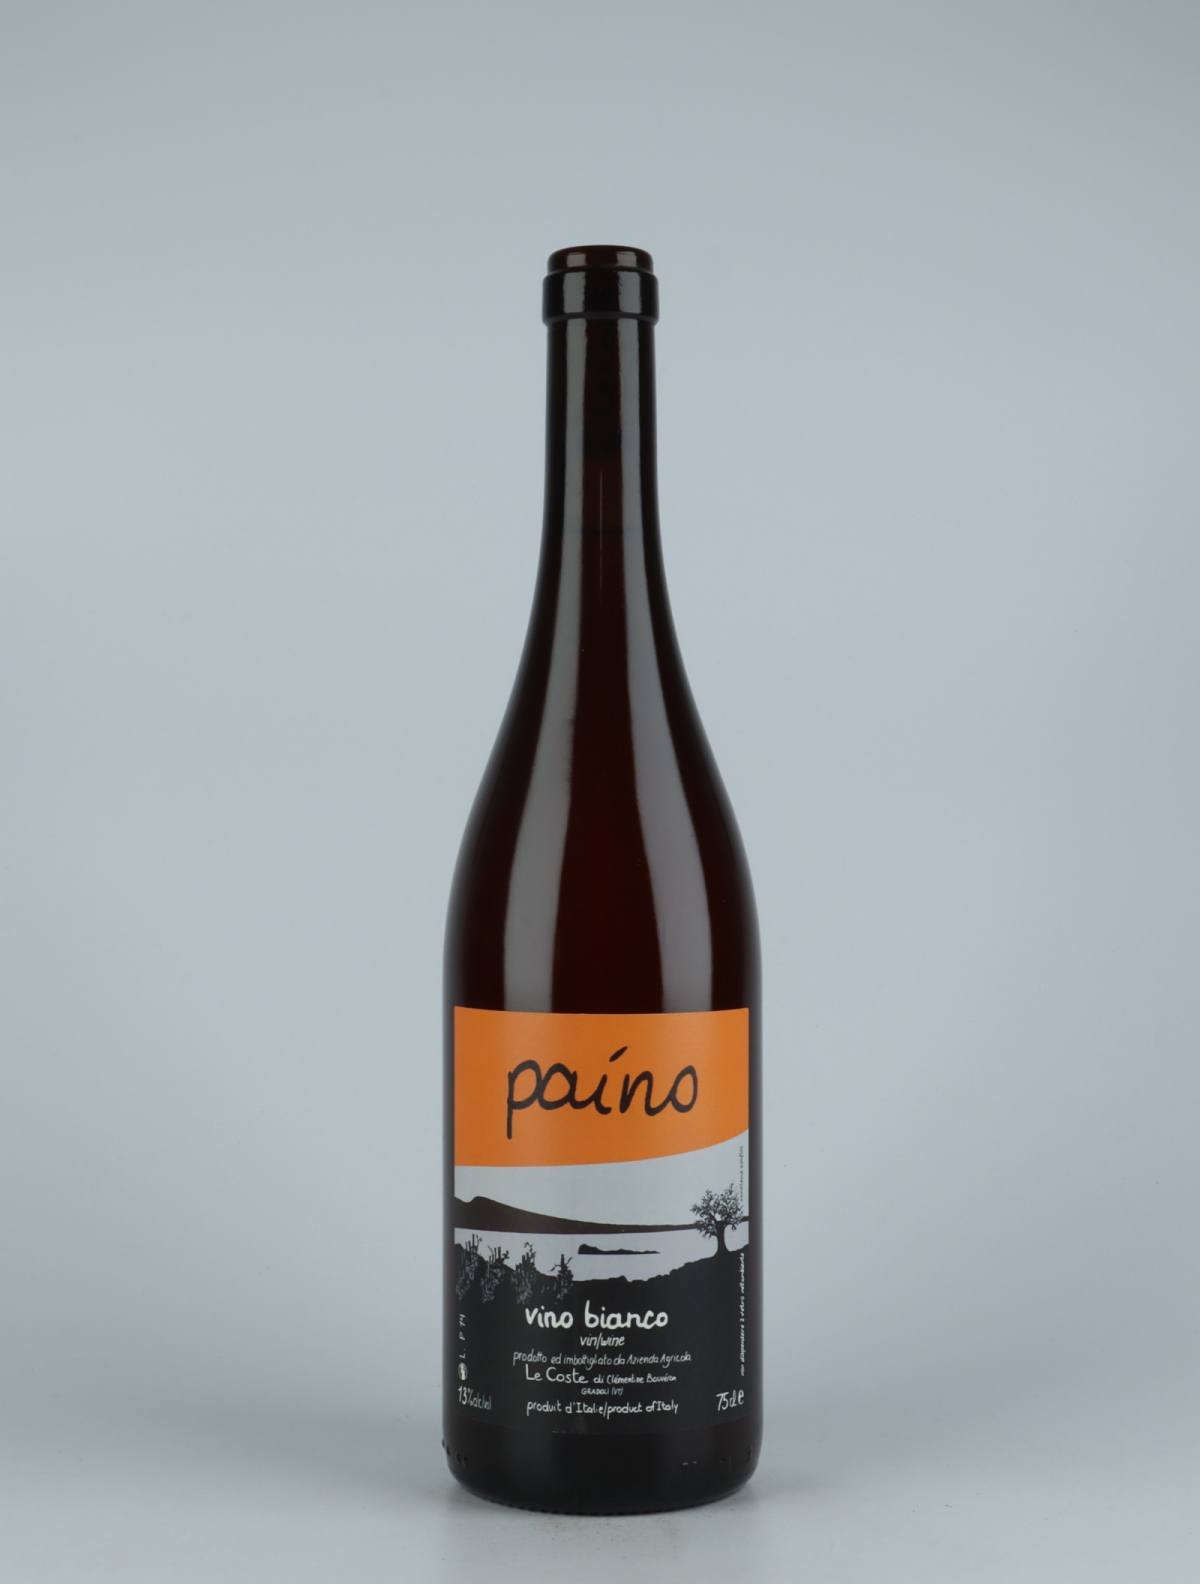 En flaske 2014 Paino Bianco Orange vin fra Le Coste, Lazio i Italien